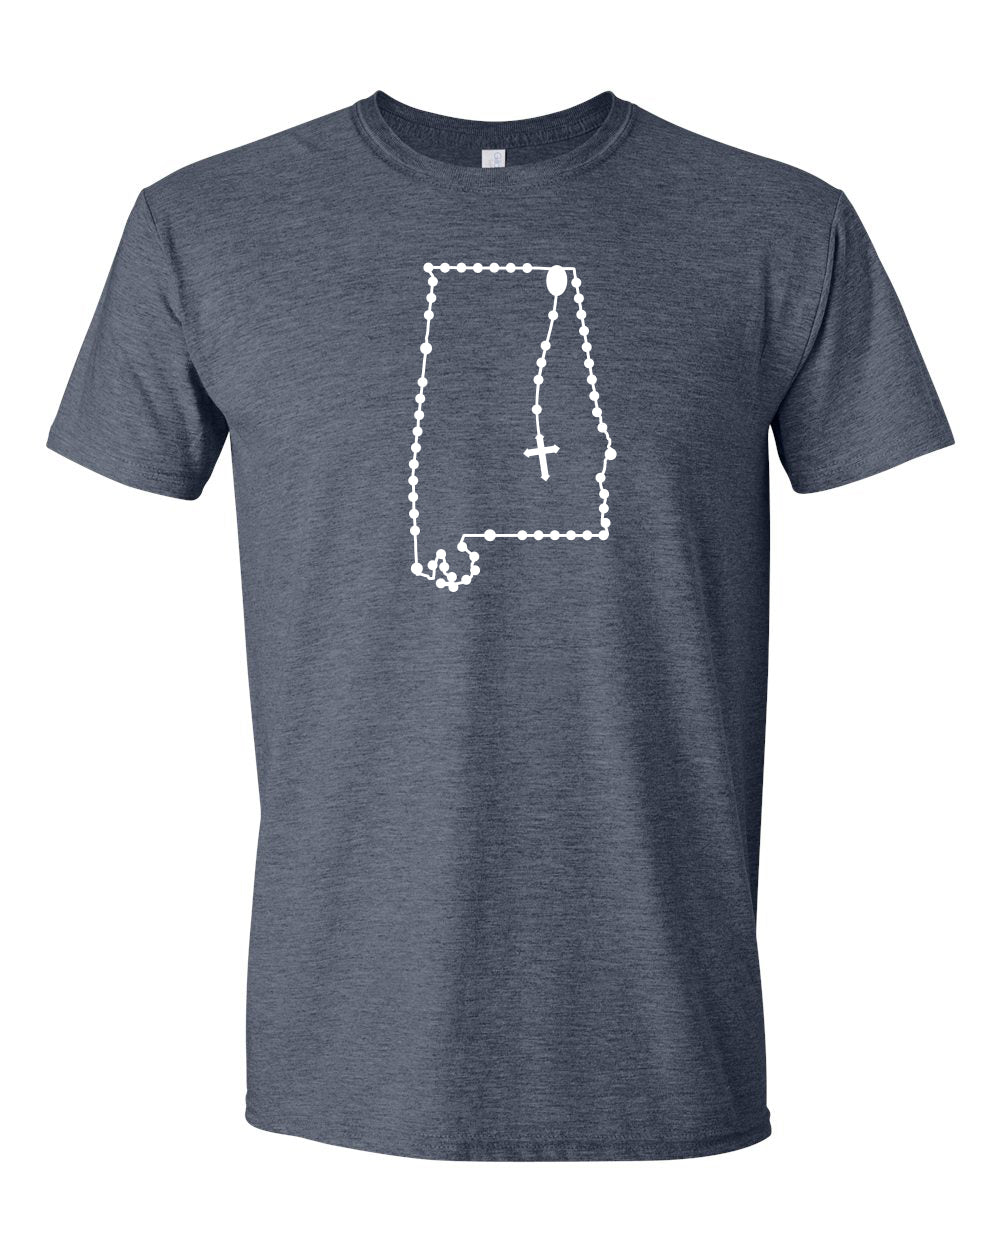 Alabama State Catholic Rosary Custom T-shirt Gift, State Pride, graphic tees, oversized - shirt-front-heathered navy